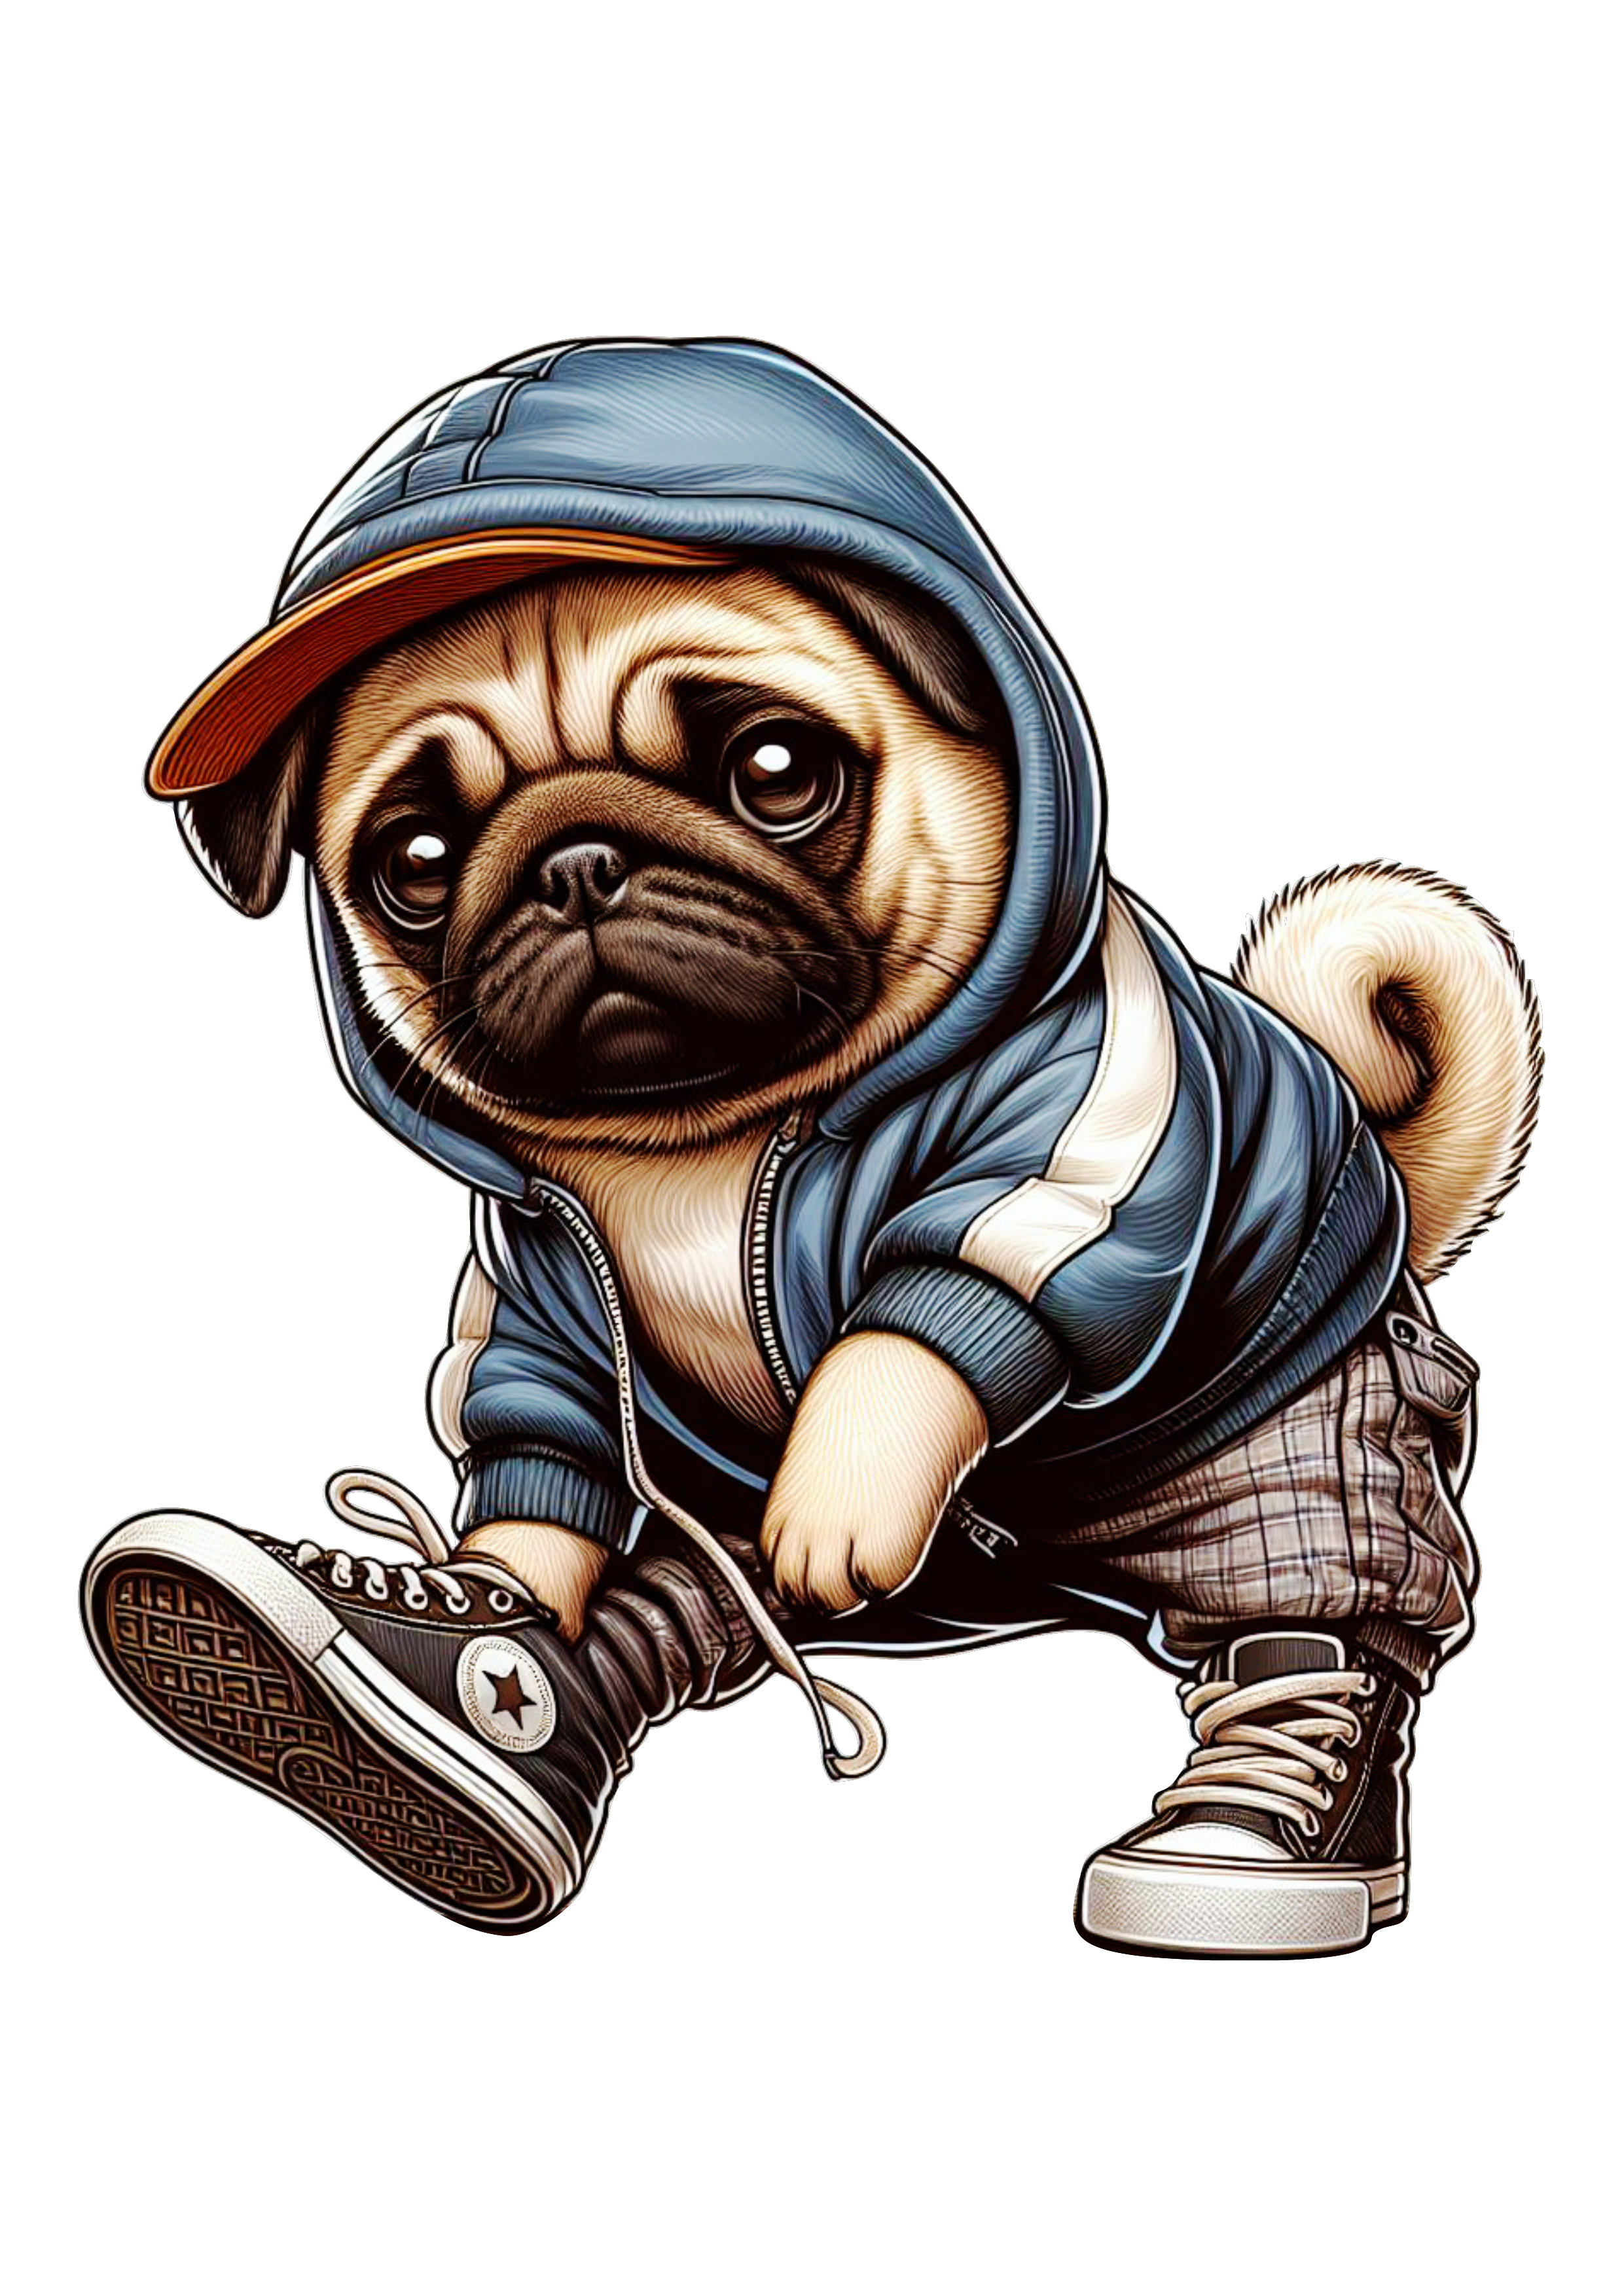 Cute doggo png pug dancing Breakdance transparent background clipart vector illustration